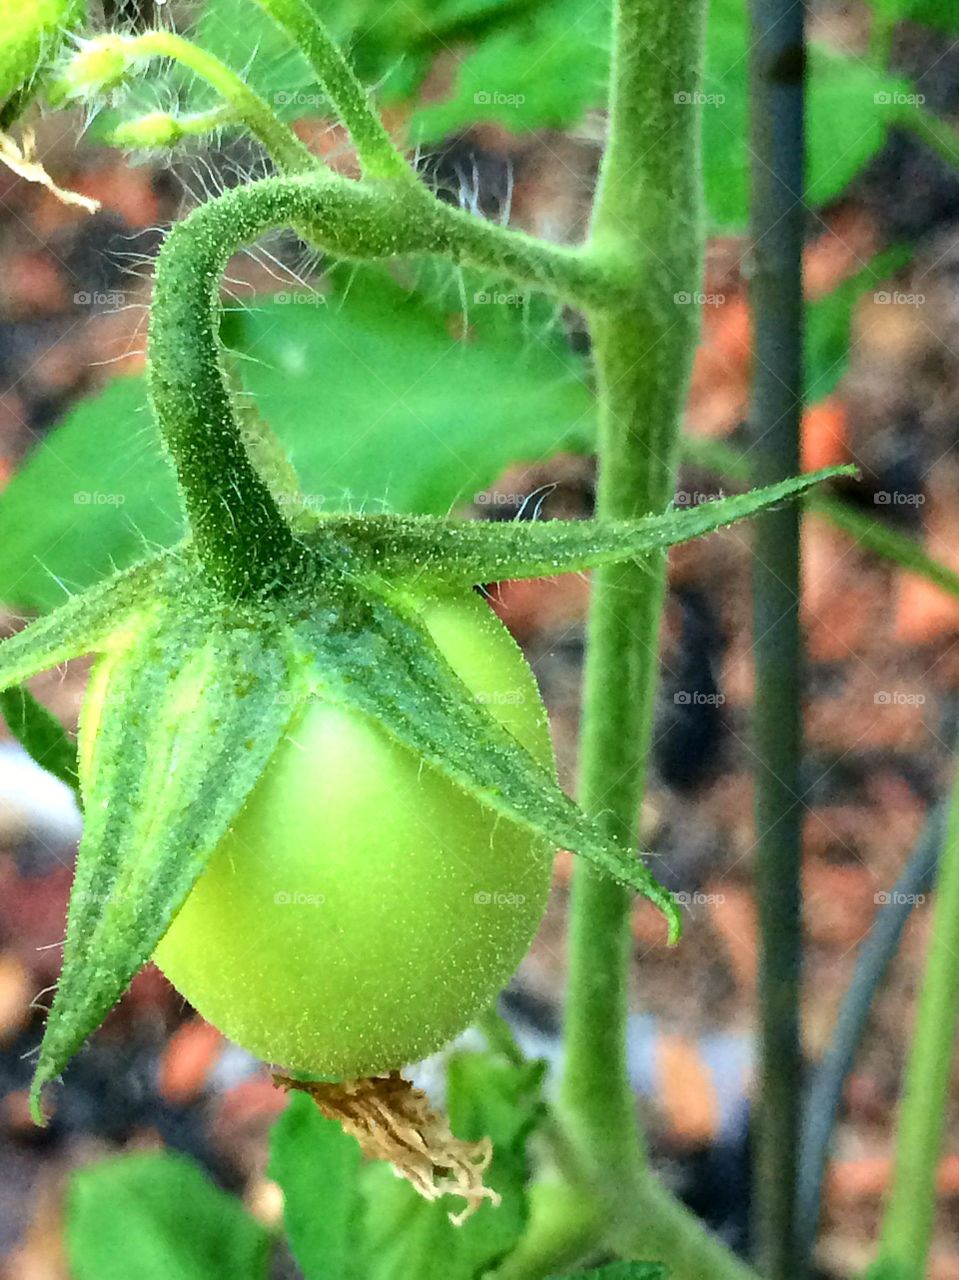 Baby tomato growth